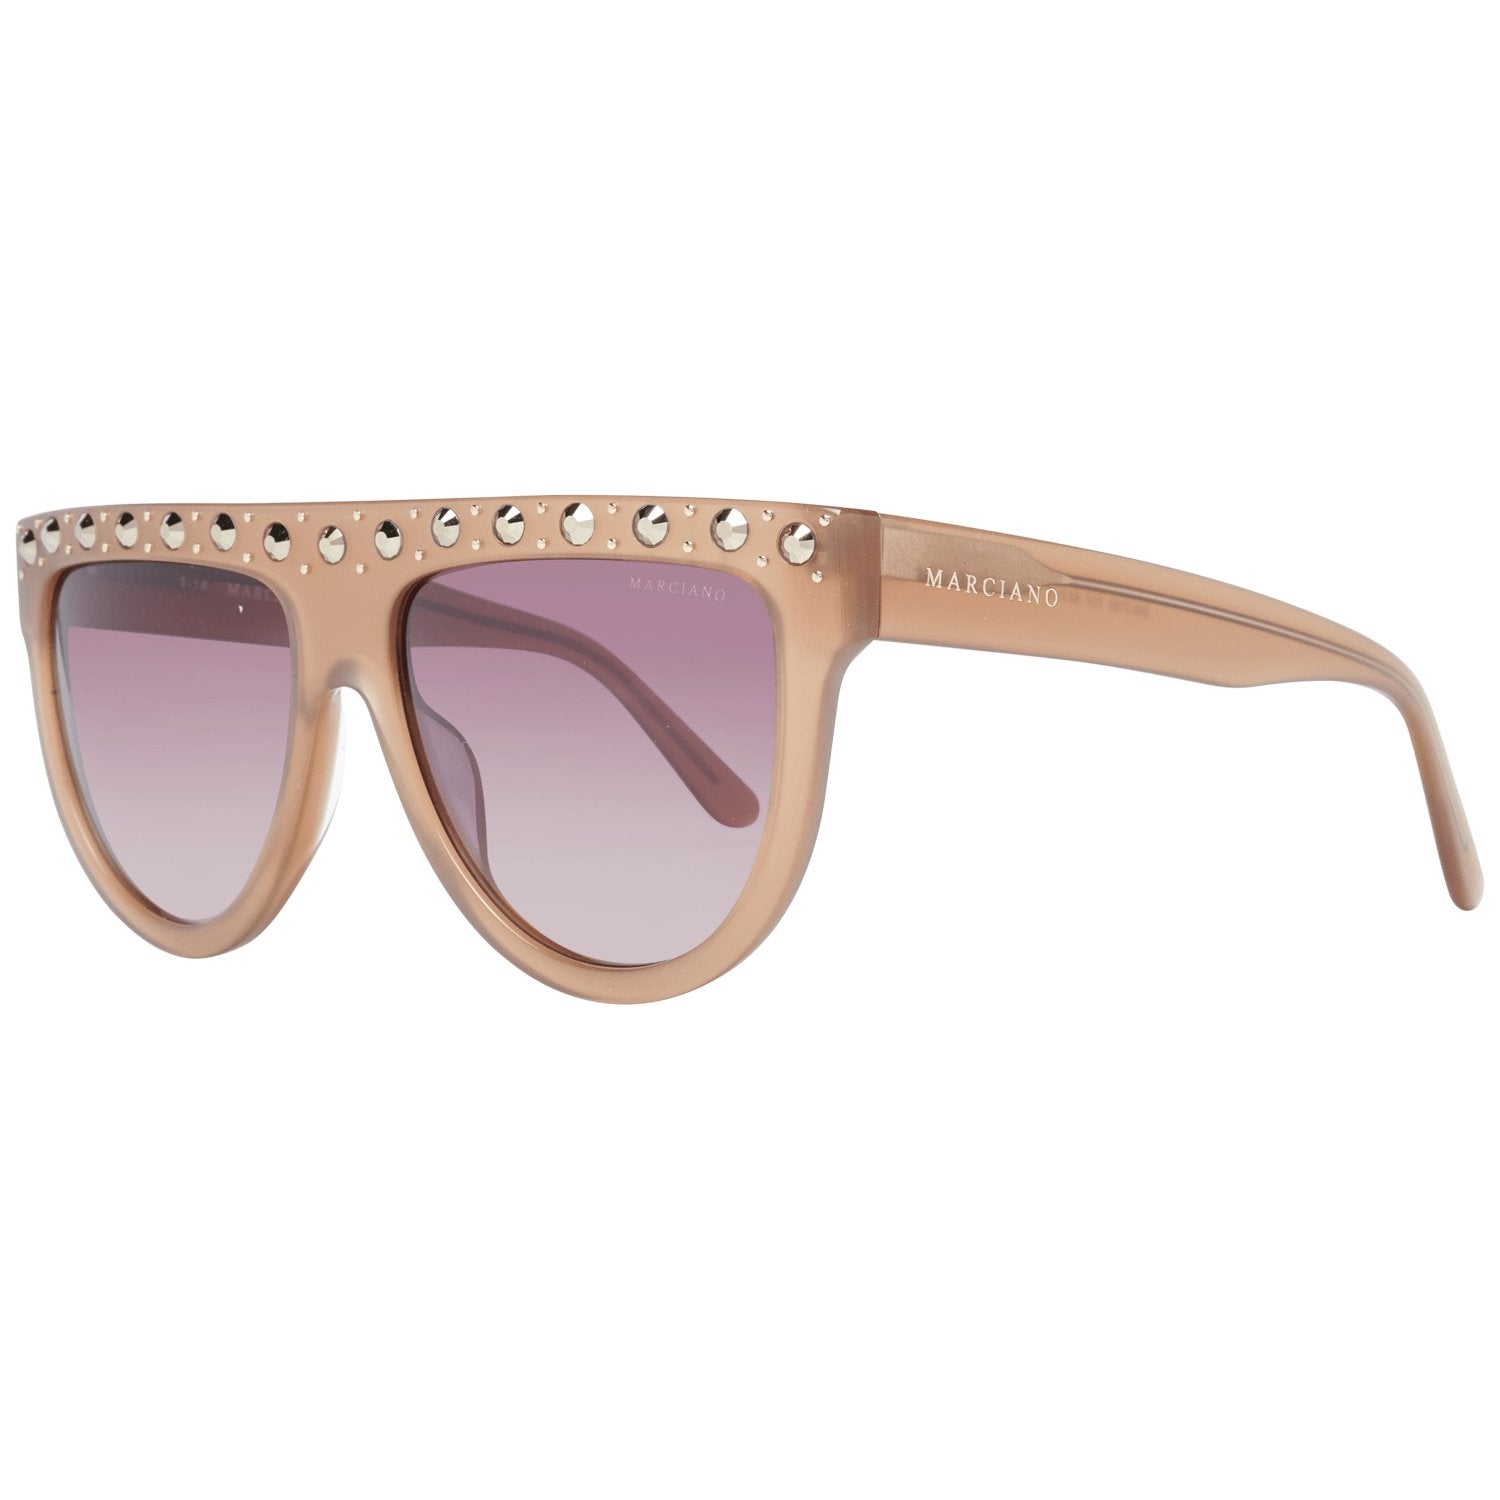 Marciano by Guess Pink Women Sunglasses - Fizigo